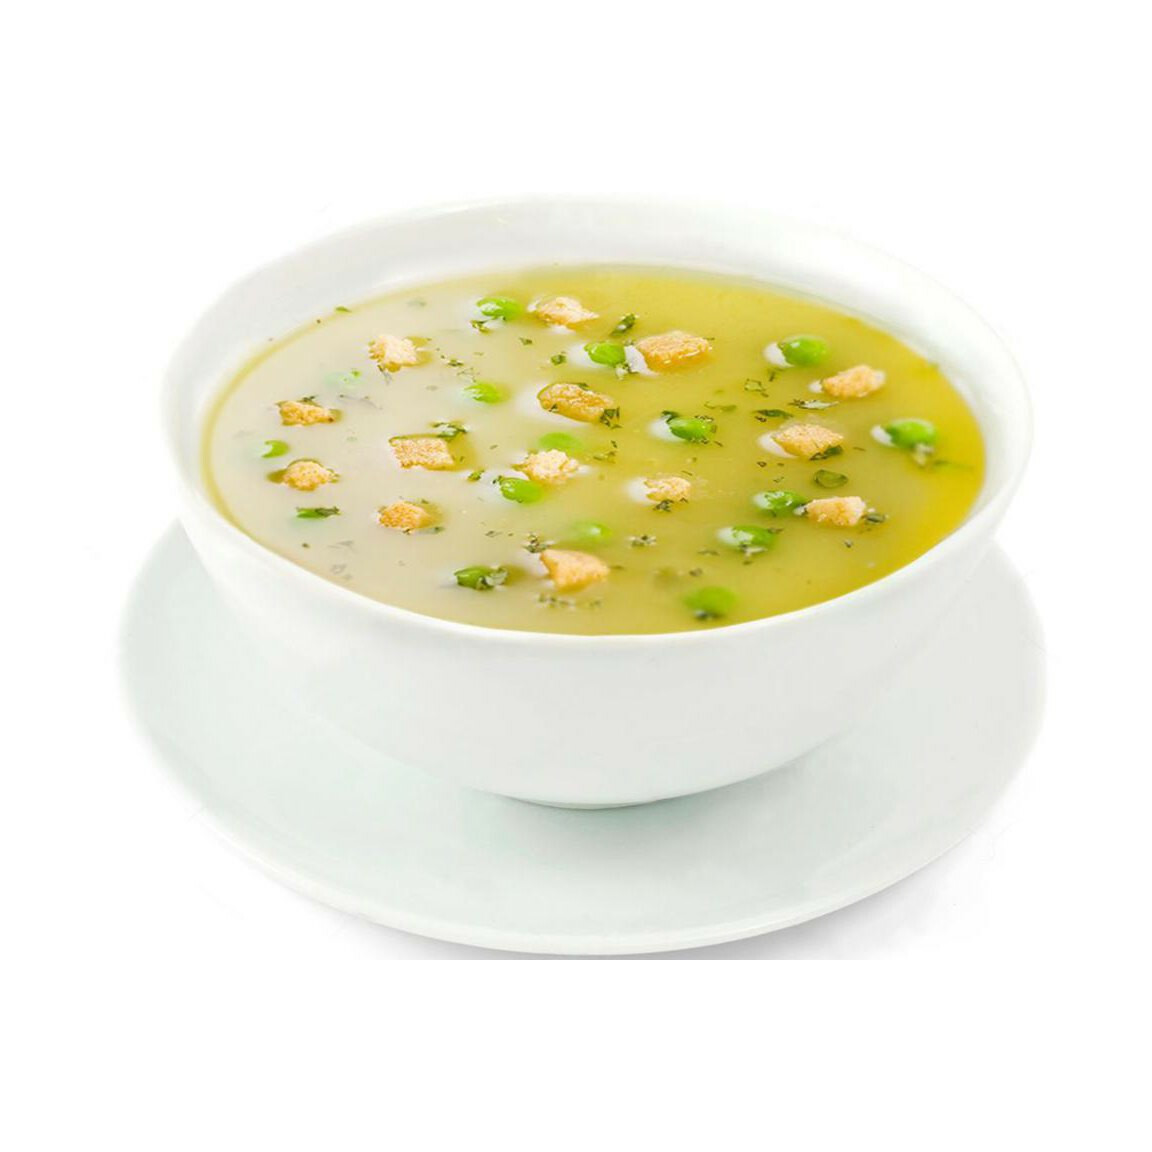 Гороховый суп ребенку 1. Для супа. Тарелка супа. Суп на белом фоне. Nfhtkrf c cegjvc.